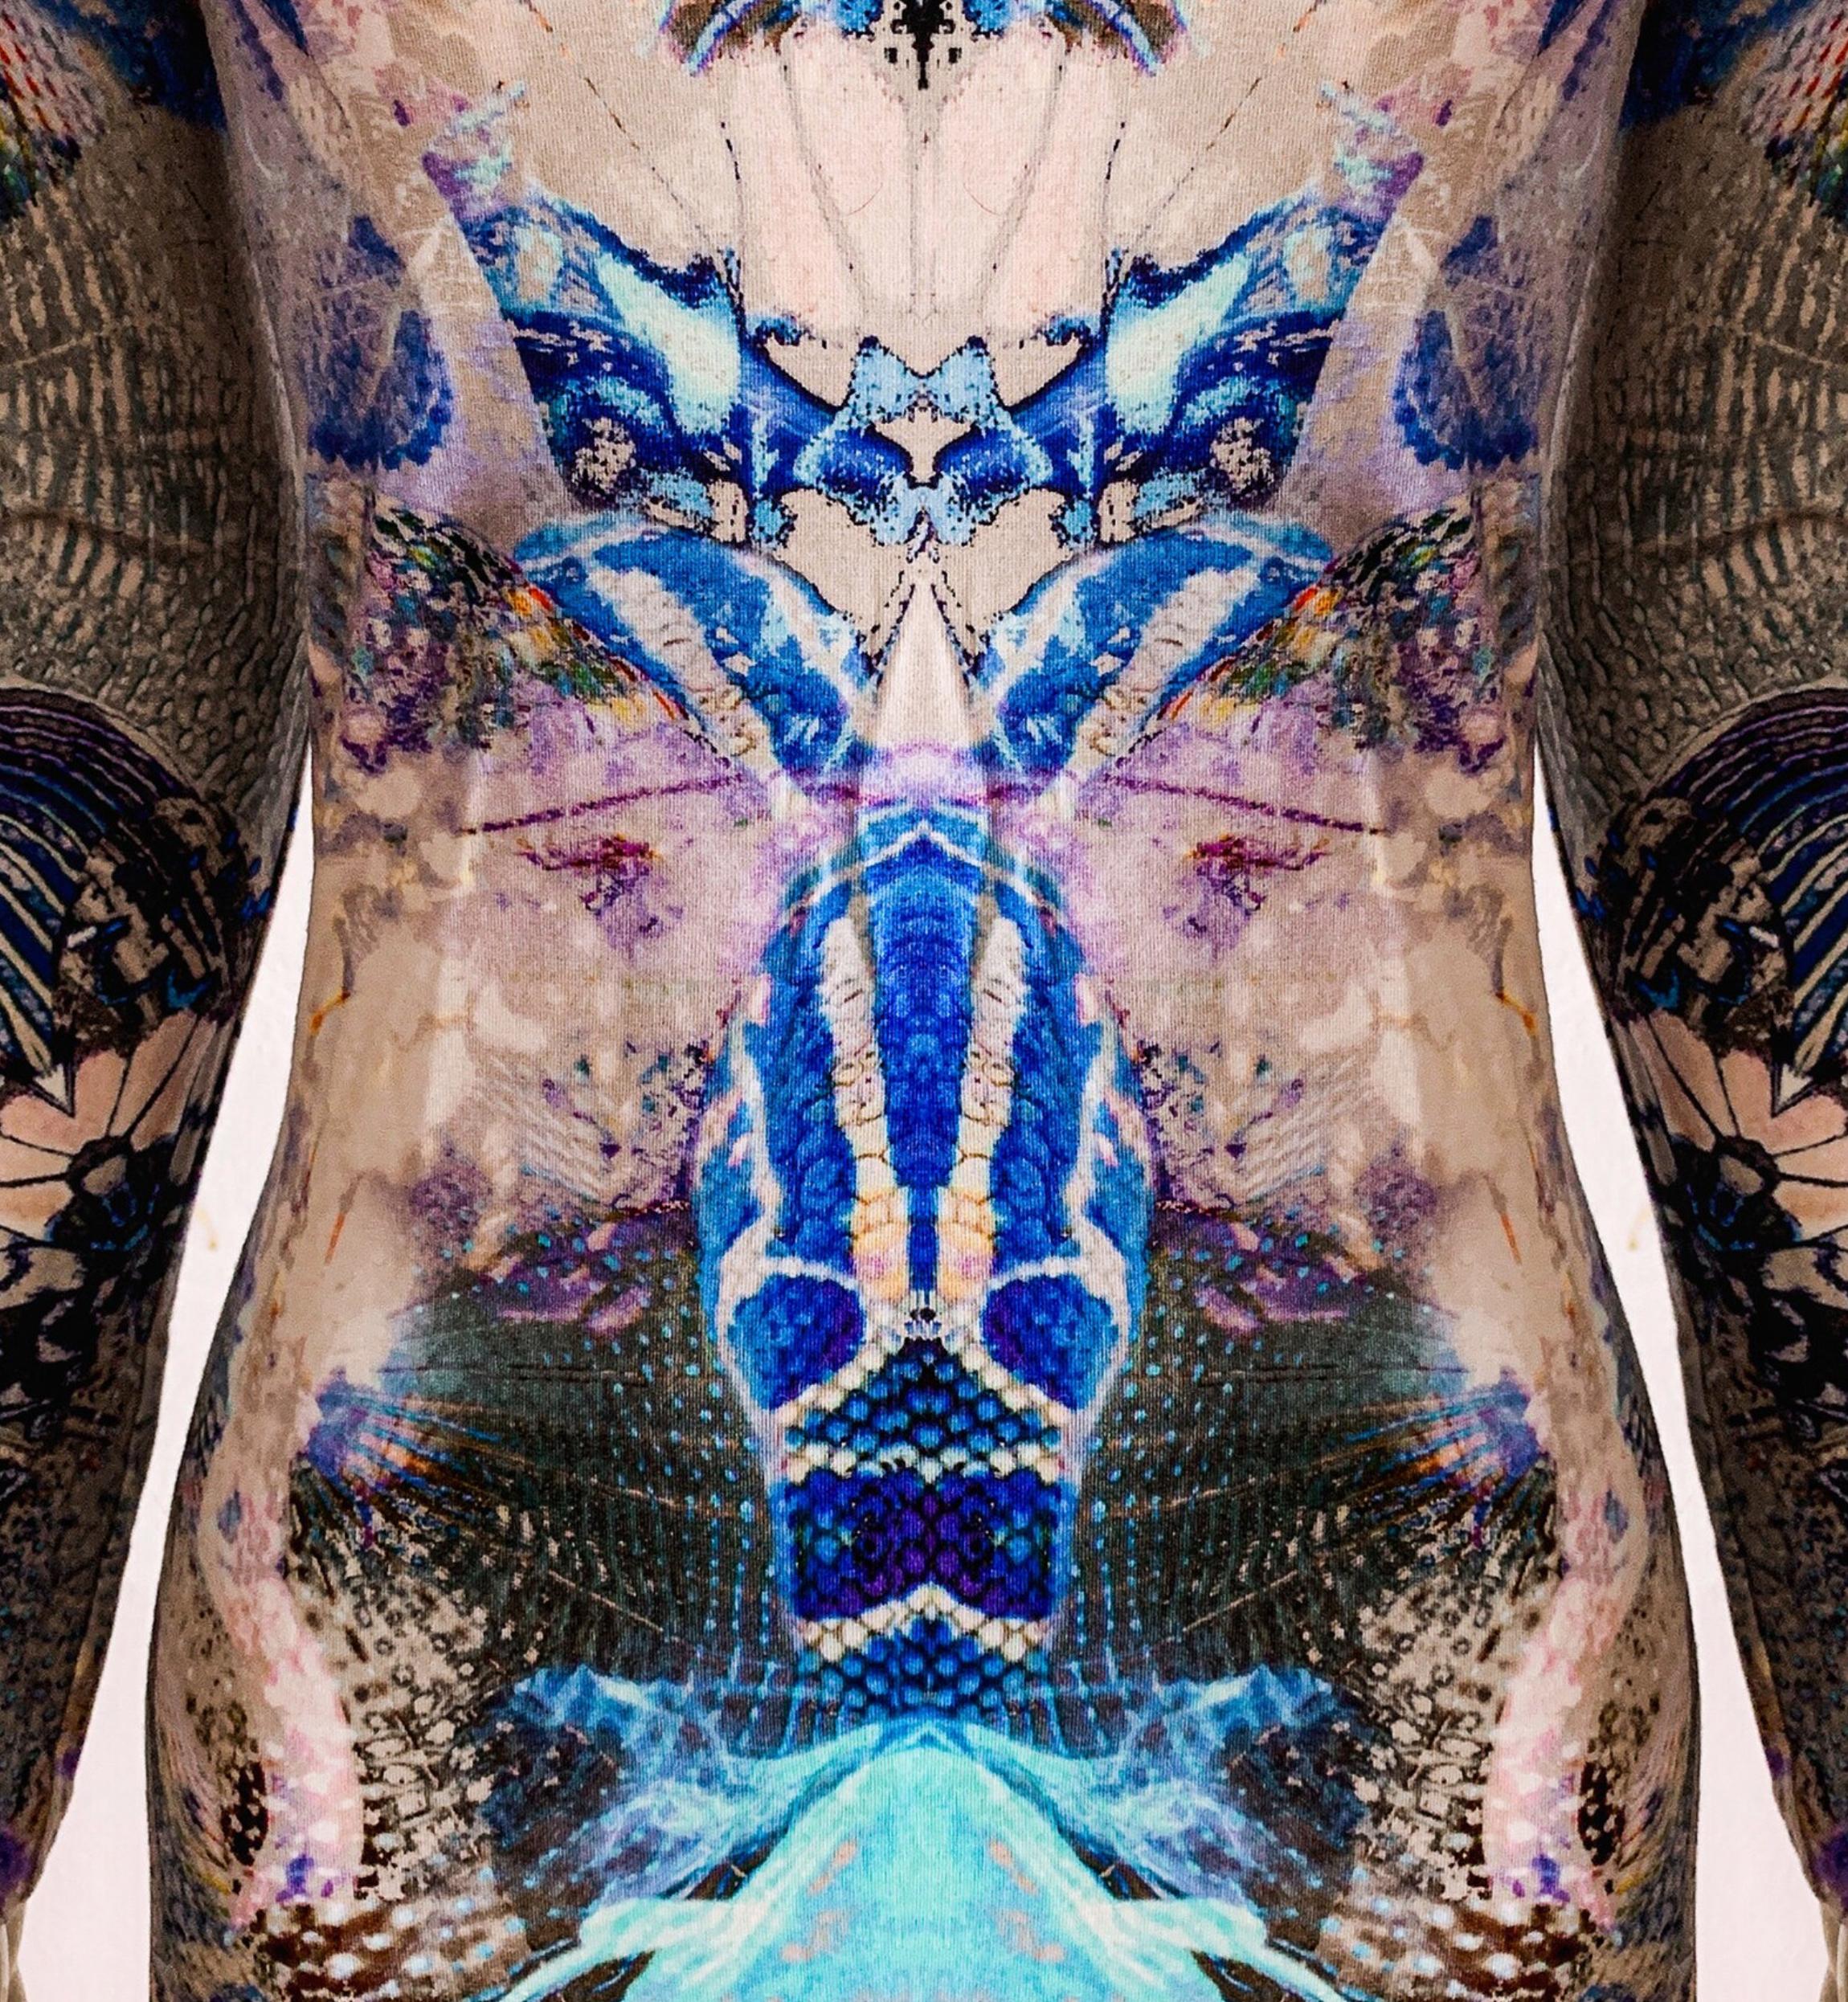 Gris Iconic Alexander McQueen Plato's Atlantis Jellyfish Print Sheath Dress Bodycon  en vente